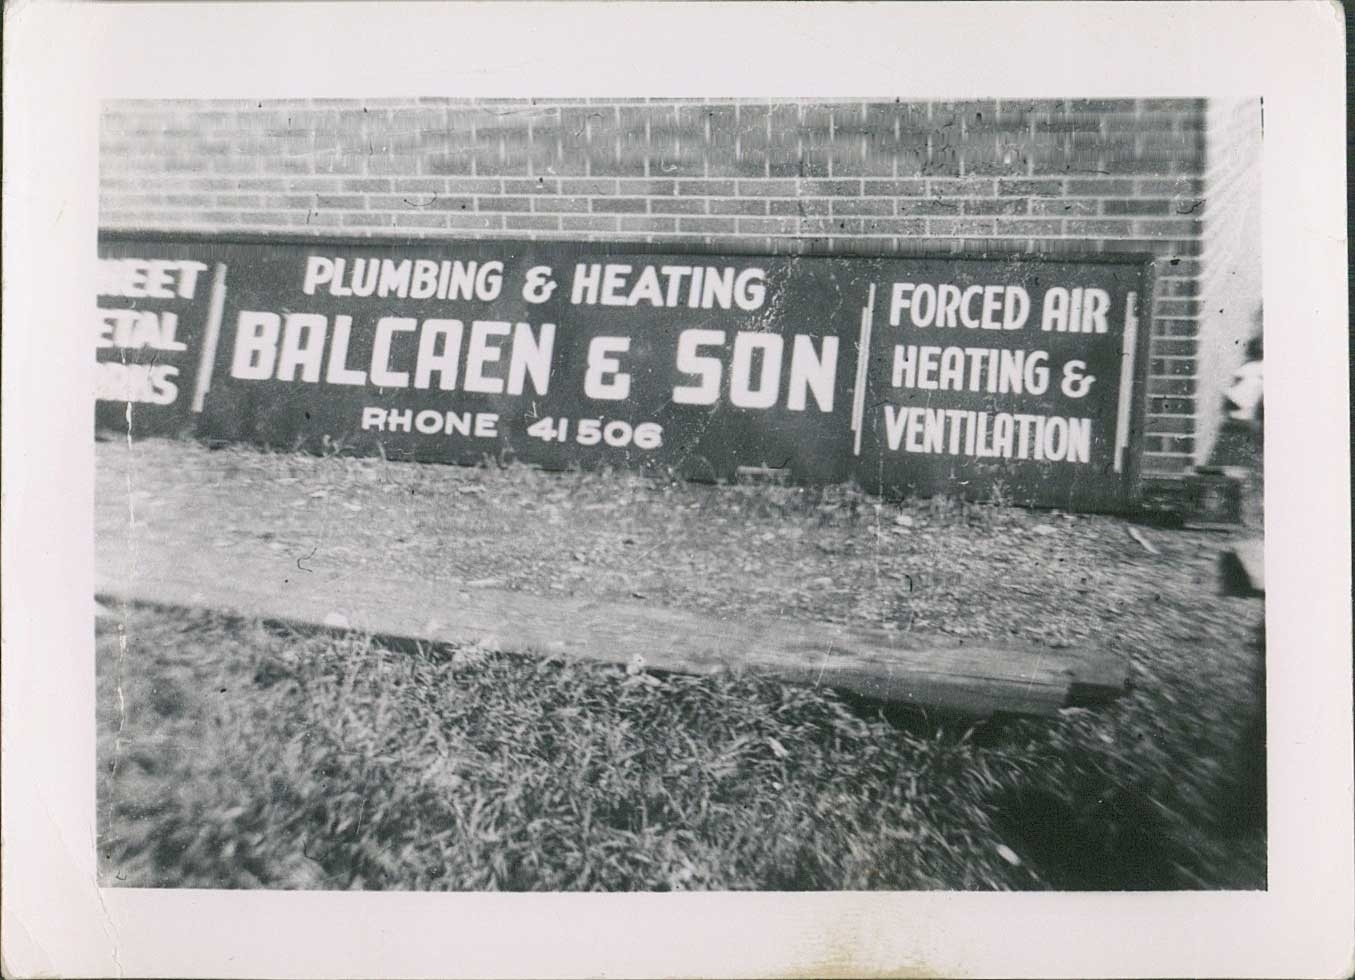 Balcaen & Sons Ltd - Furnaces